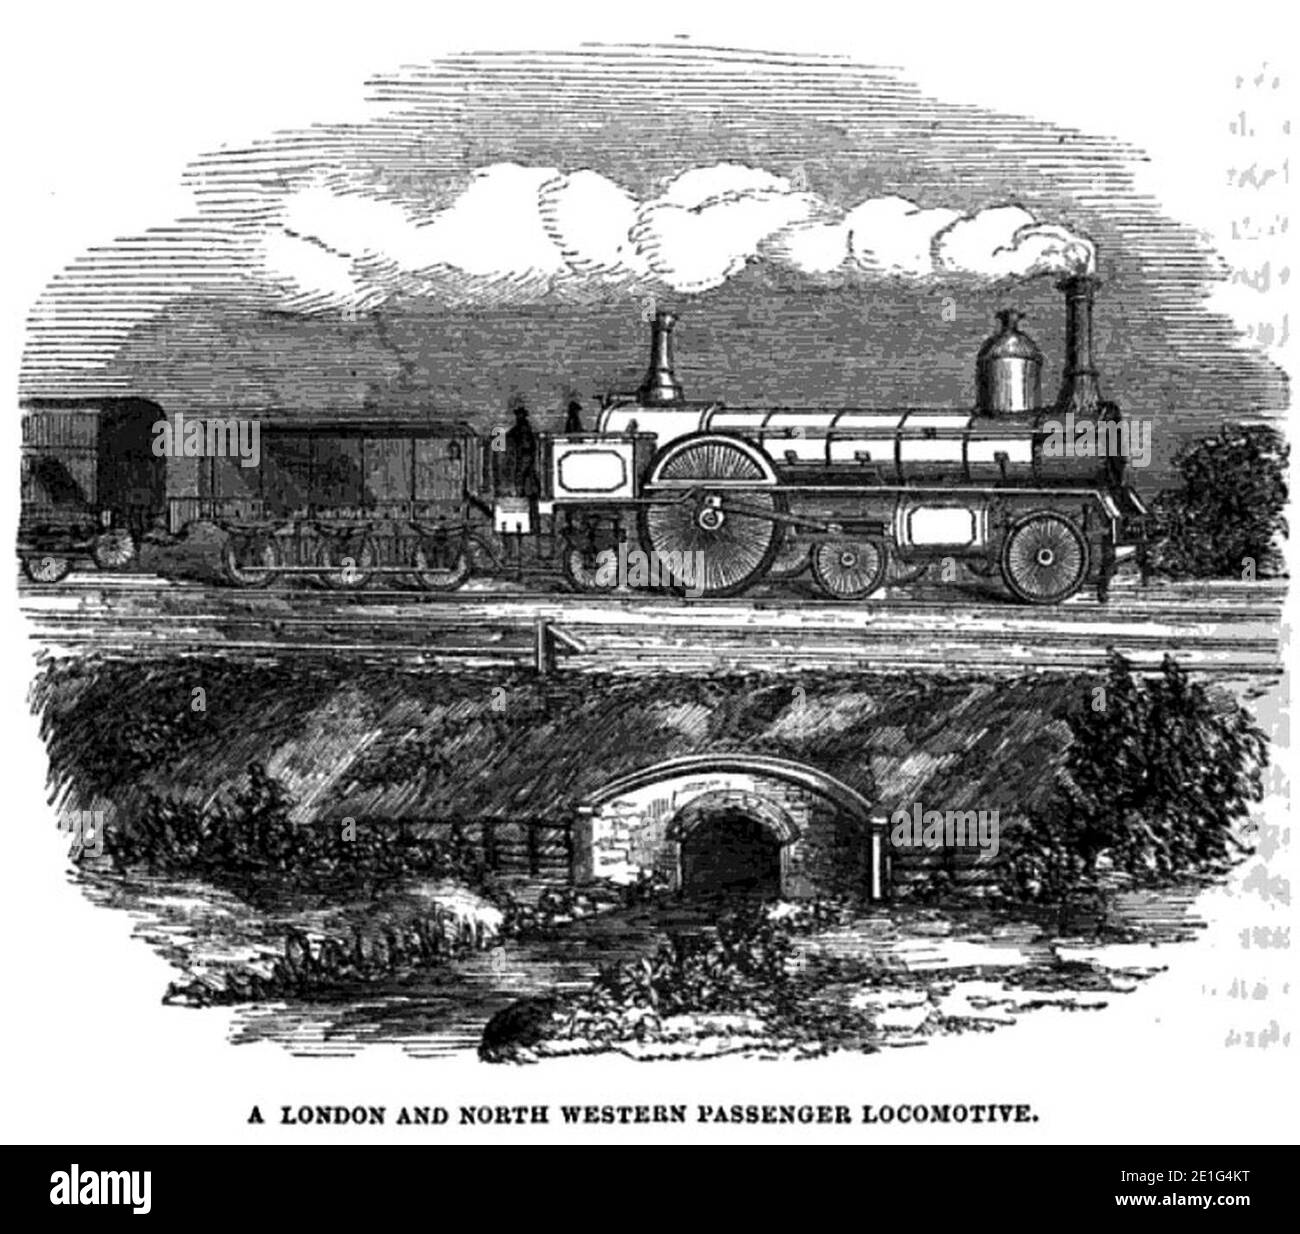 London and North Western passenger locomotive - circa 1852 illustration. Stock Photo